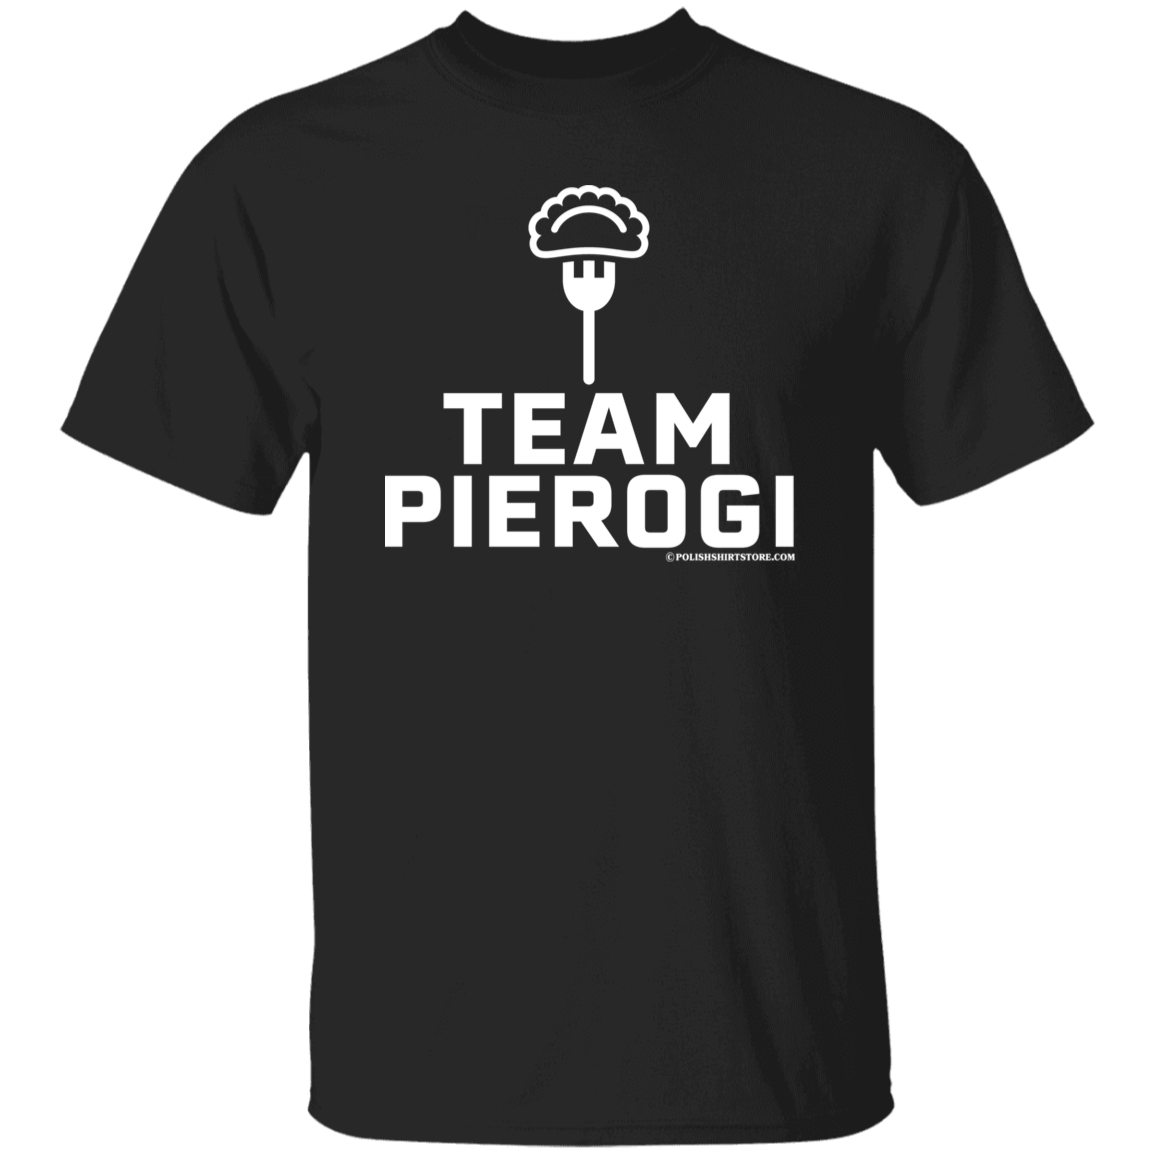 Team Pierogi Apparel CustomCat G500 5.3 oz. T-Shirt Black S